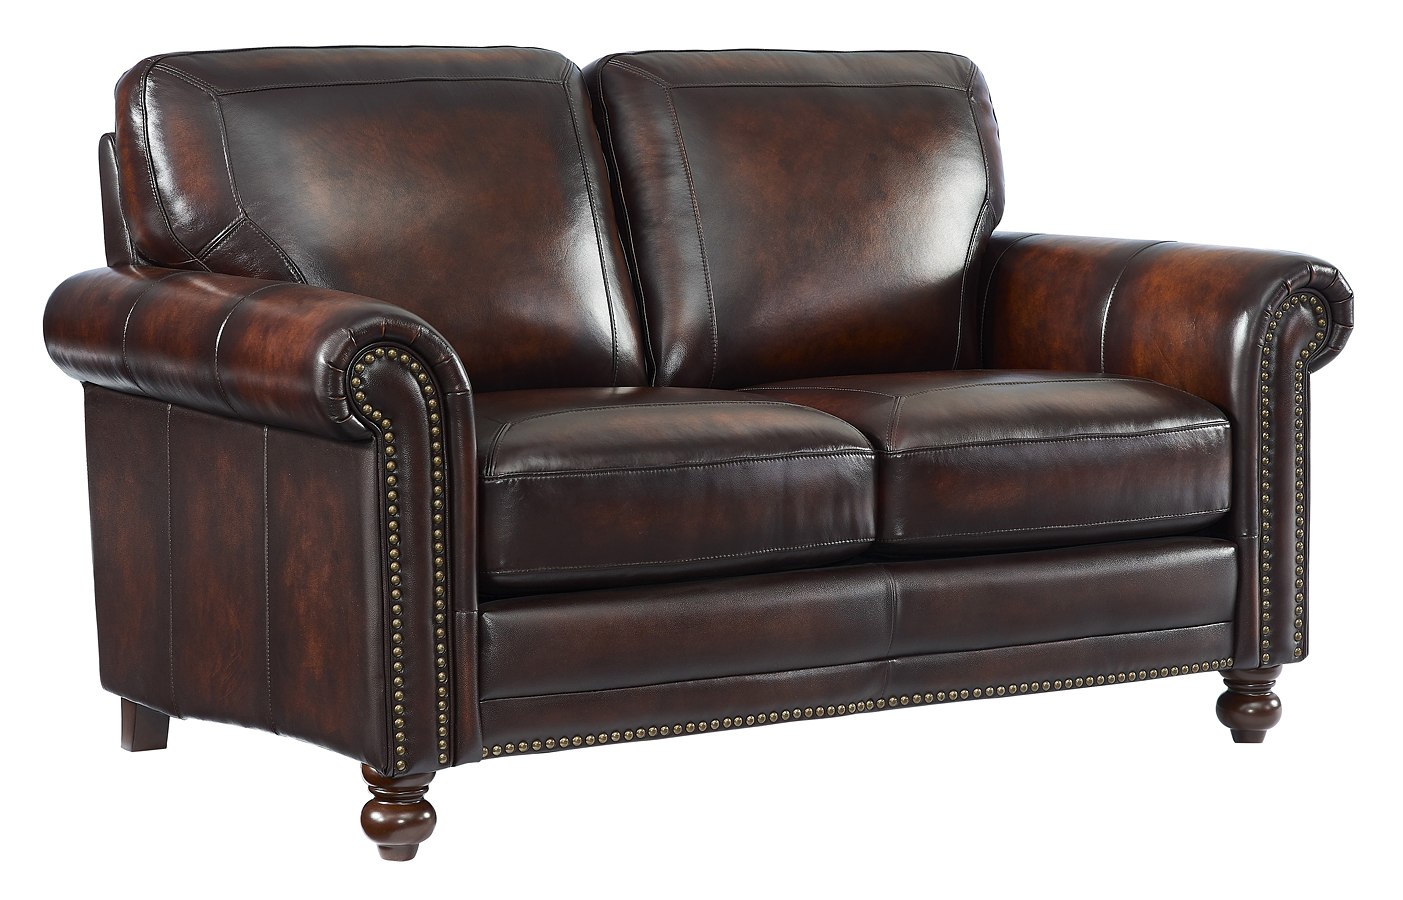 Hampton Leather Living Room Set by Italia FurniturePick